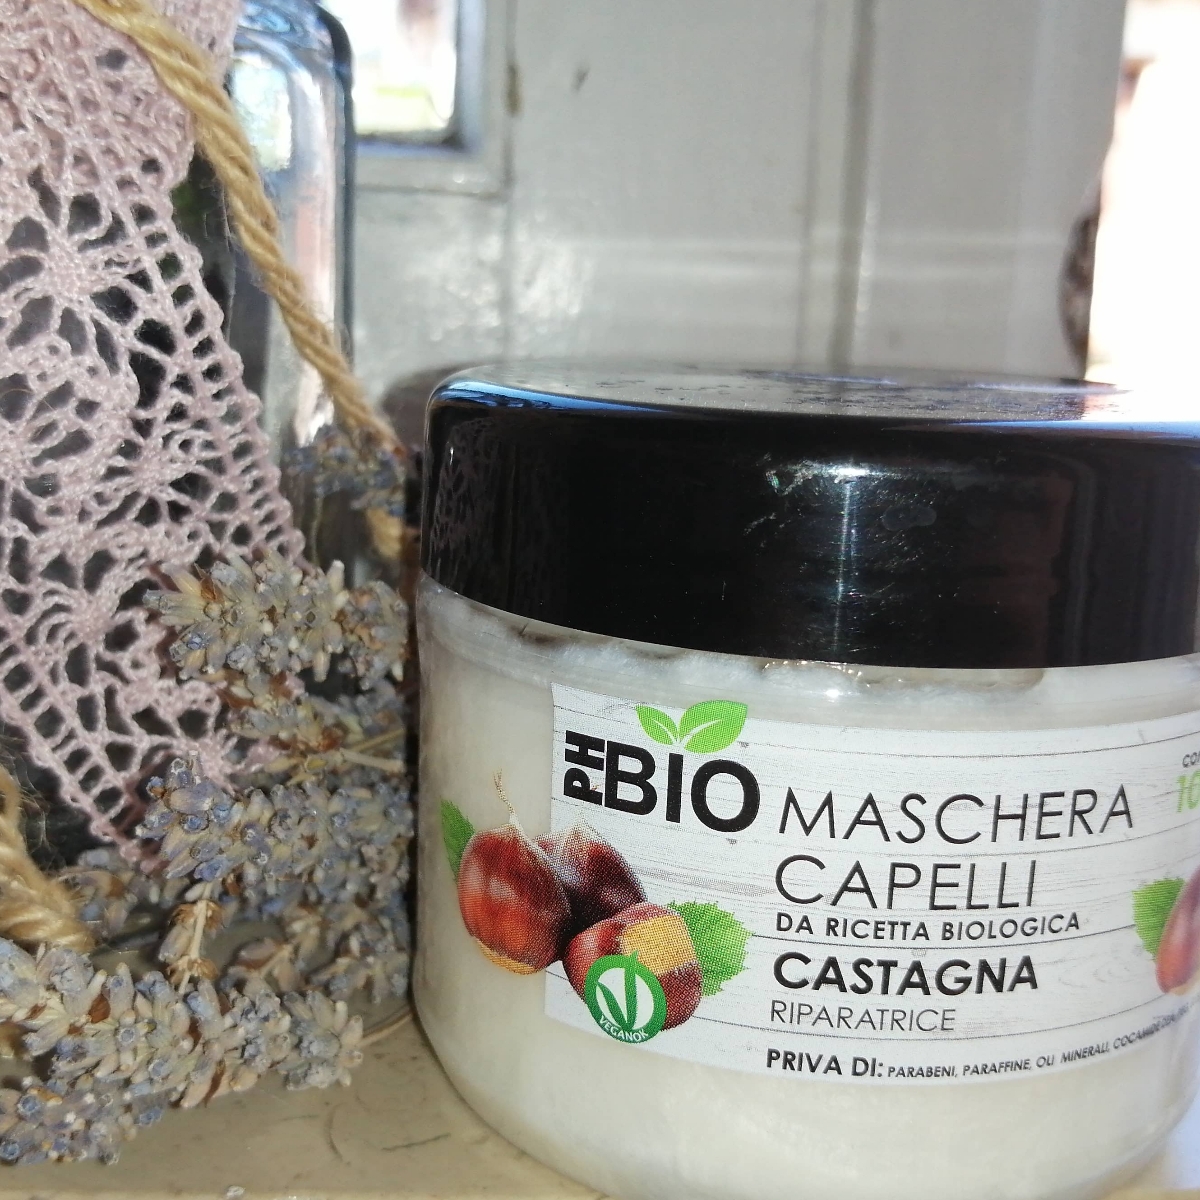 Phbio Maschera capelli castagna riparatrice Reviews | abillion